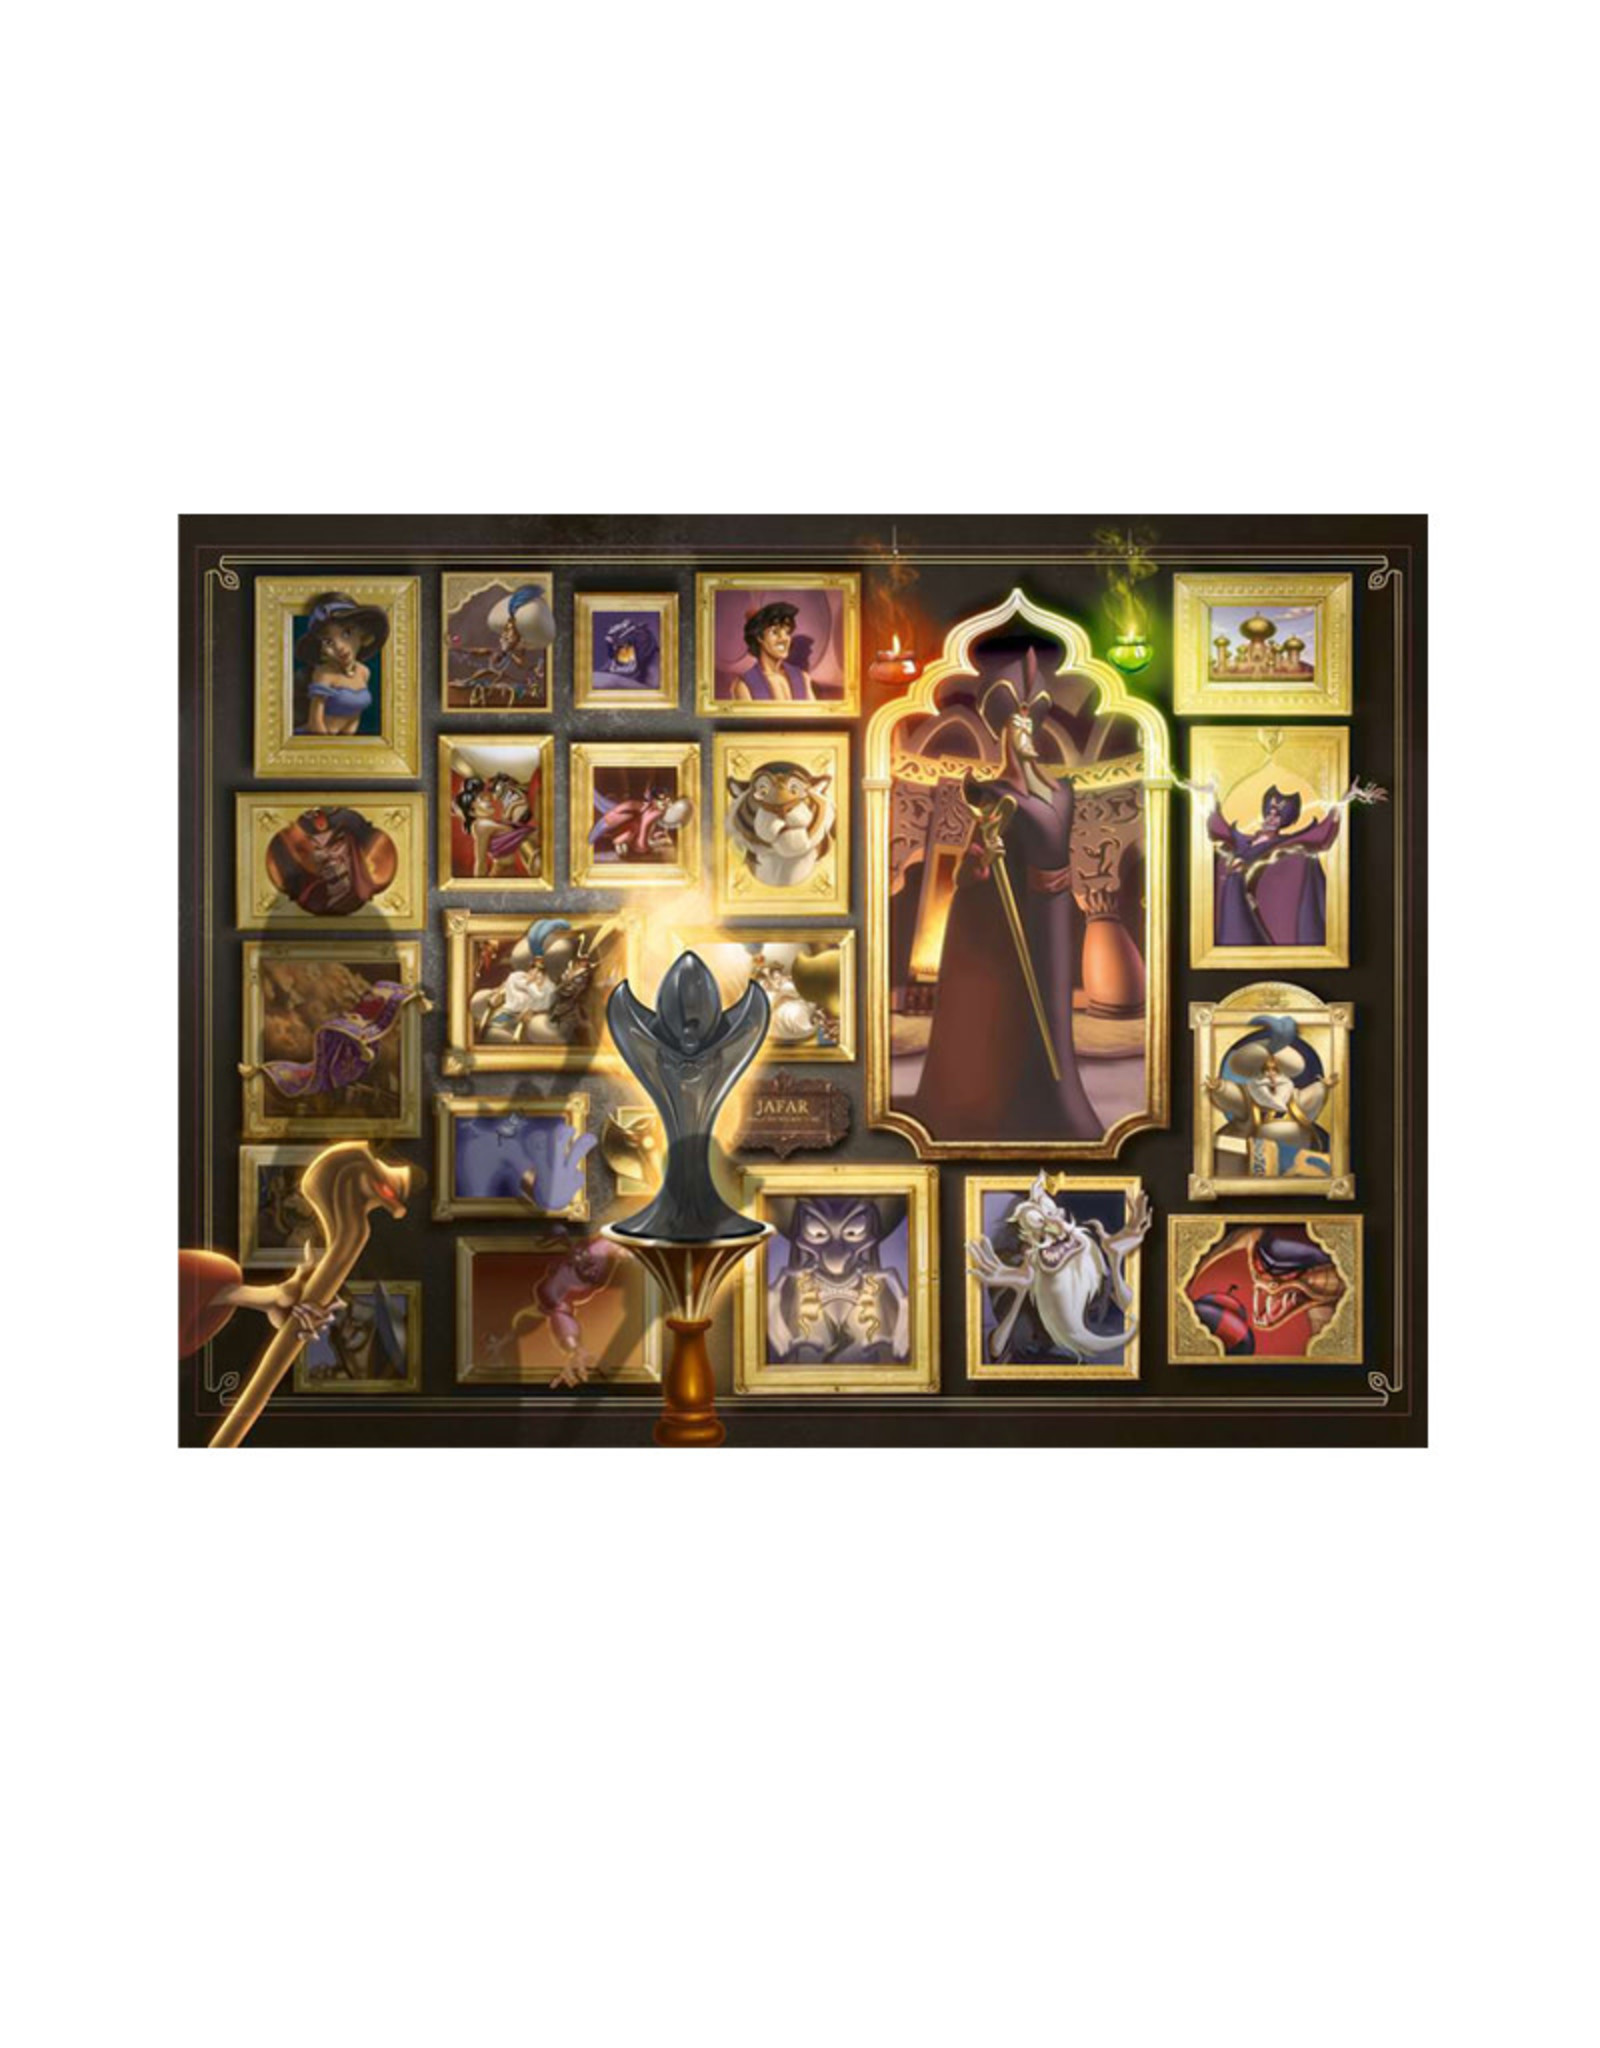 Ravensburger Disney Villainous Jafar Puzzle 1000 PCS